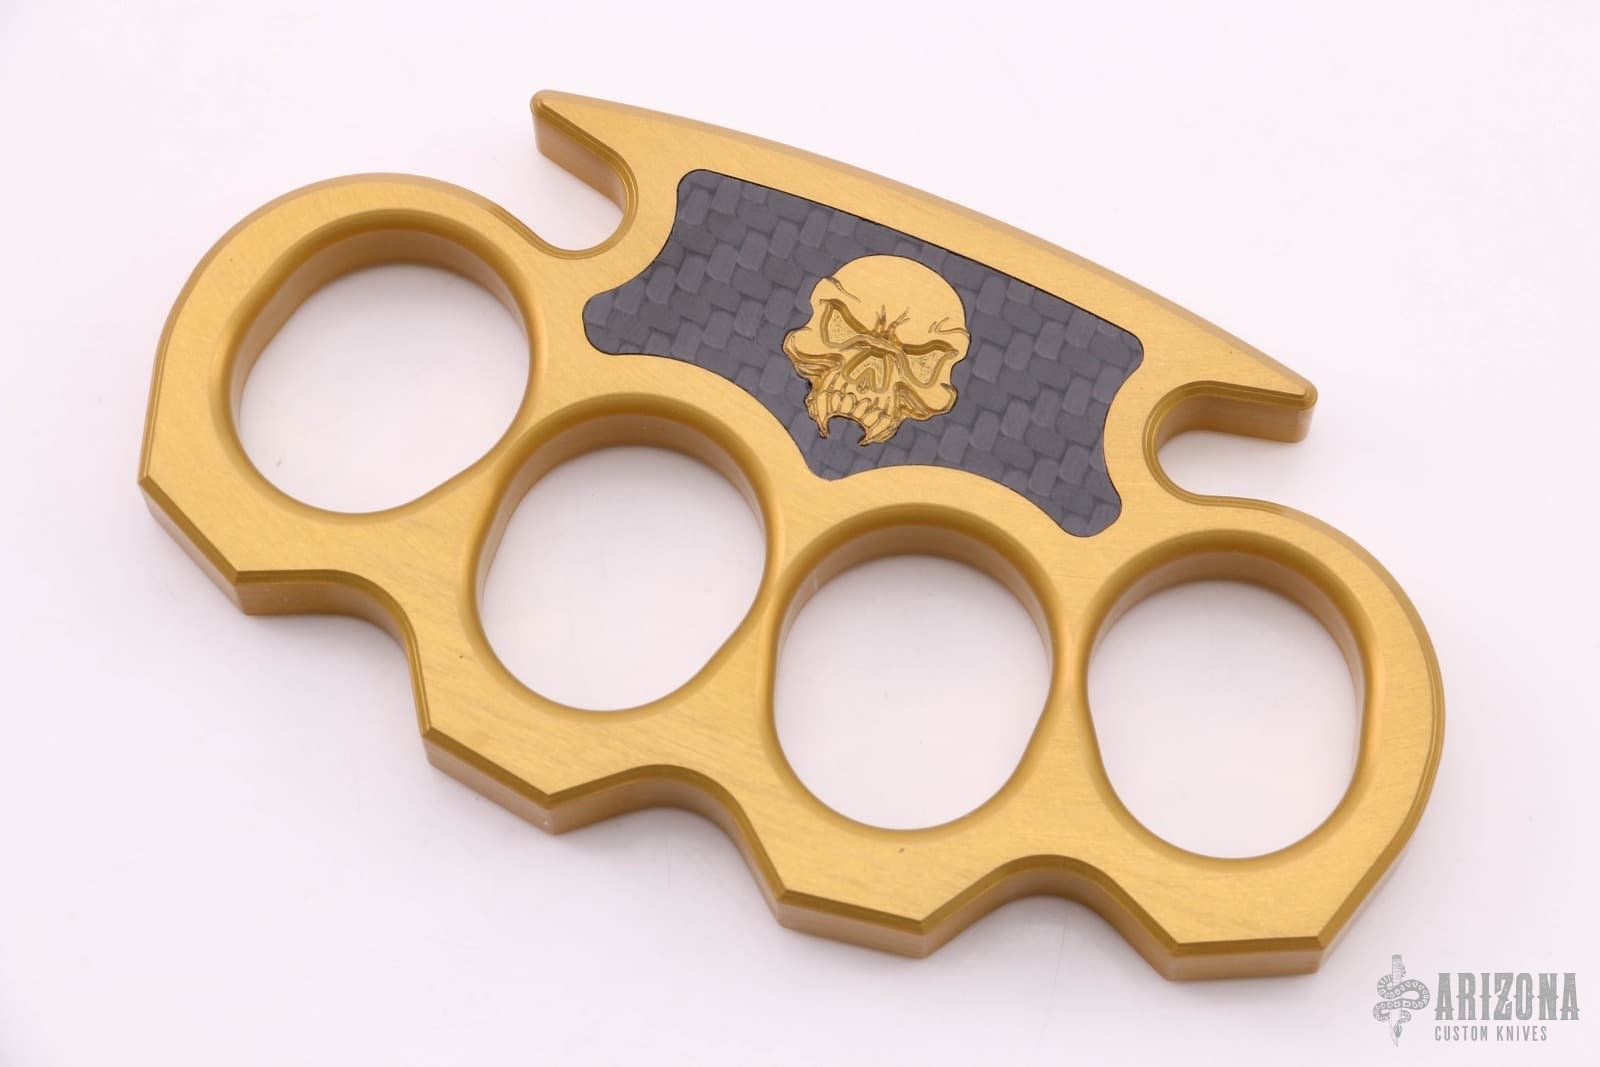 Custom Brass Knuckles | Arizona Custom Knives